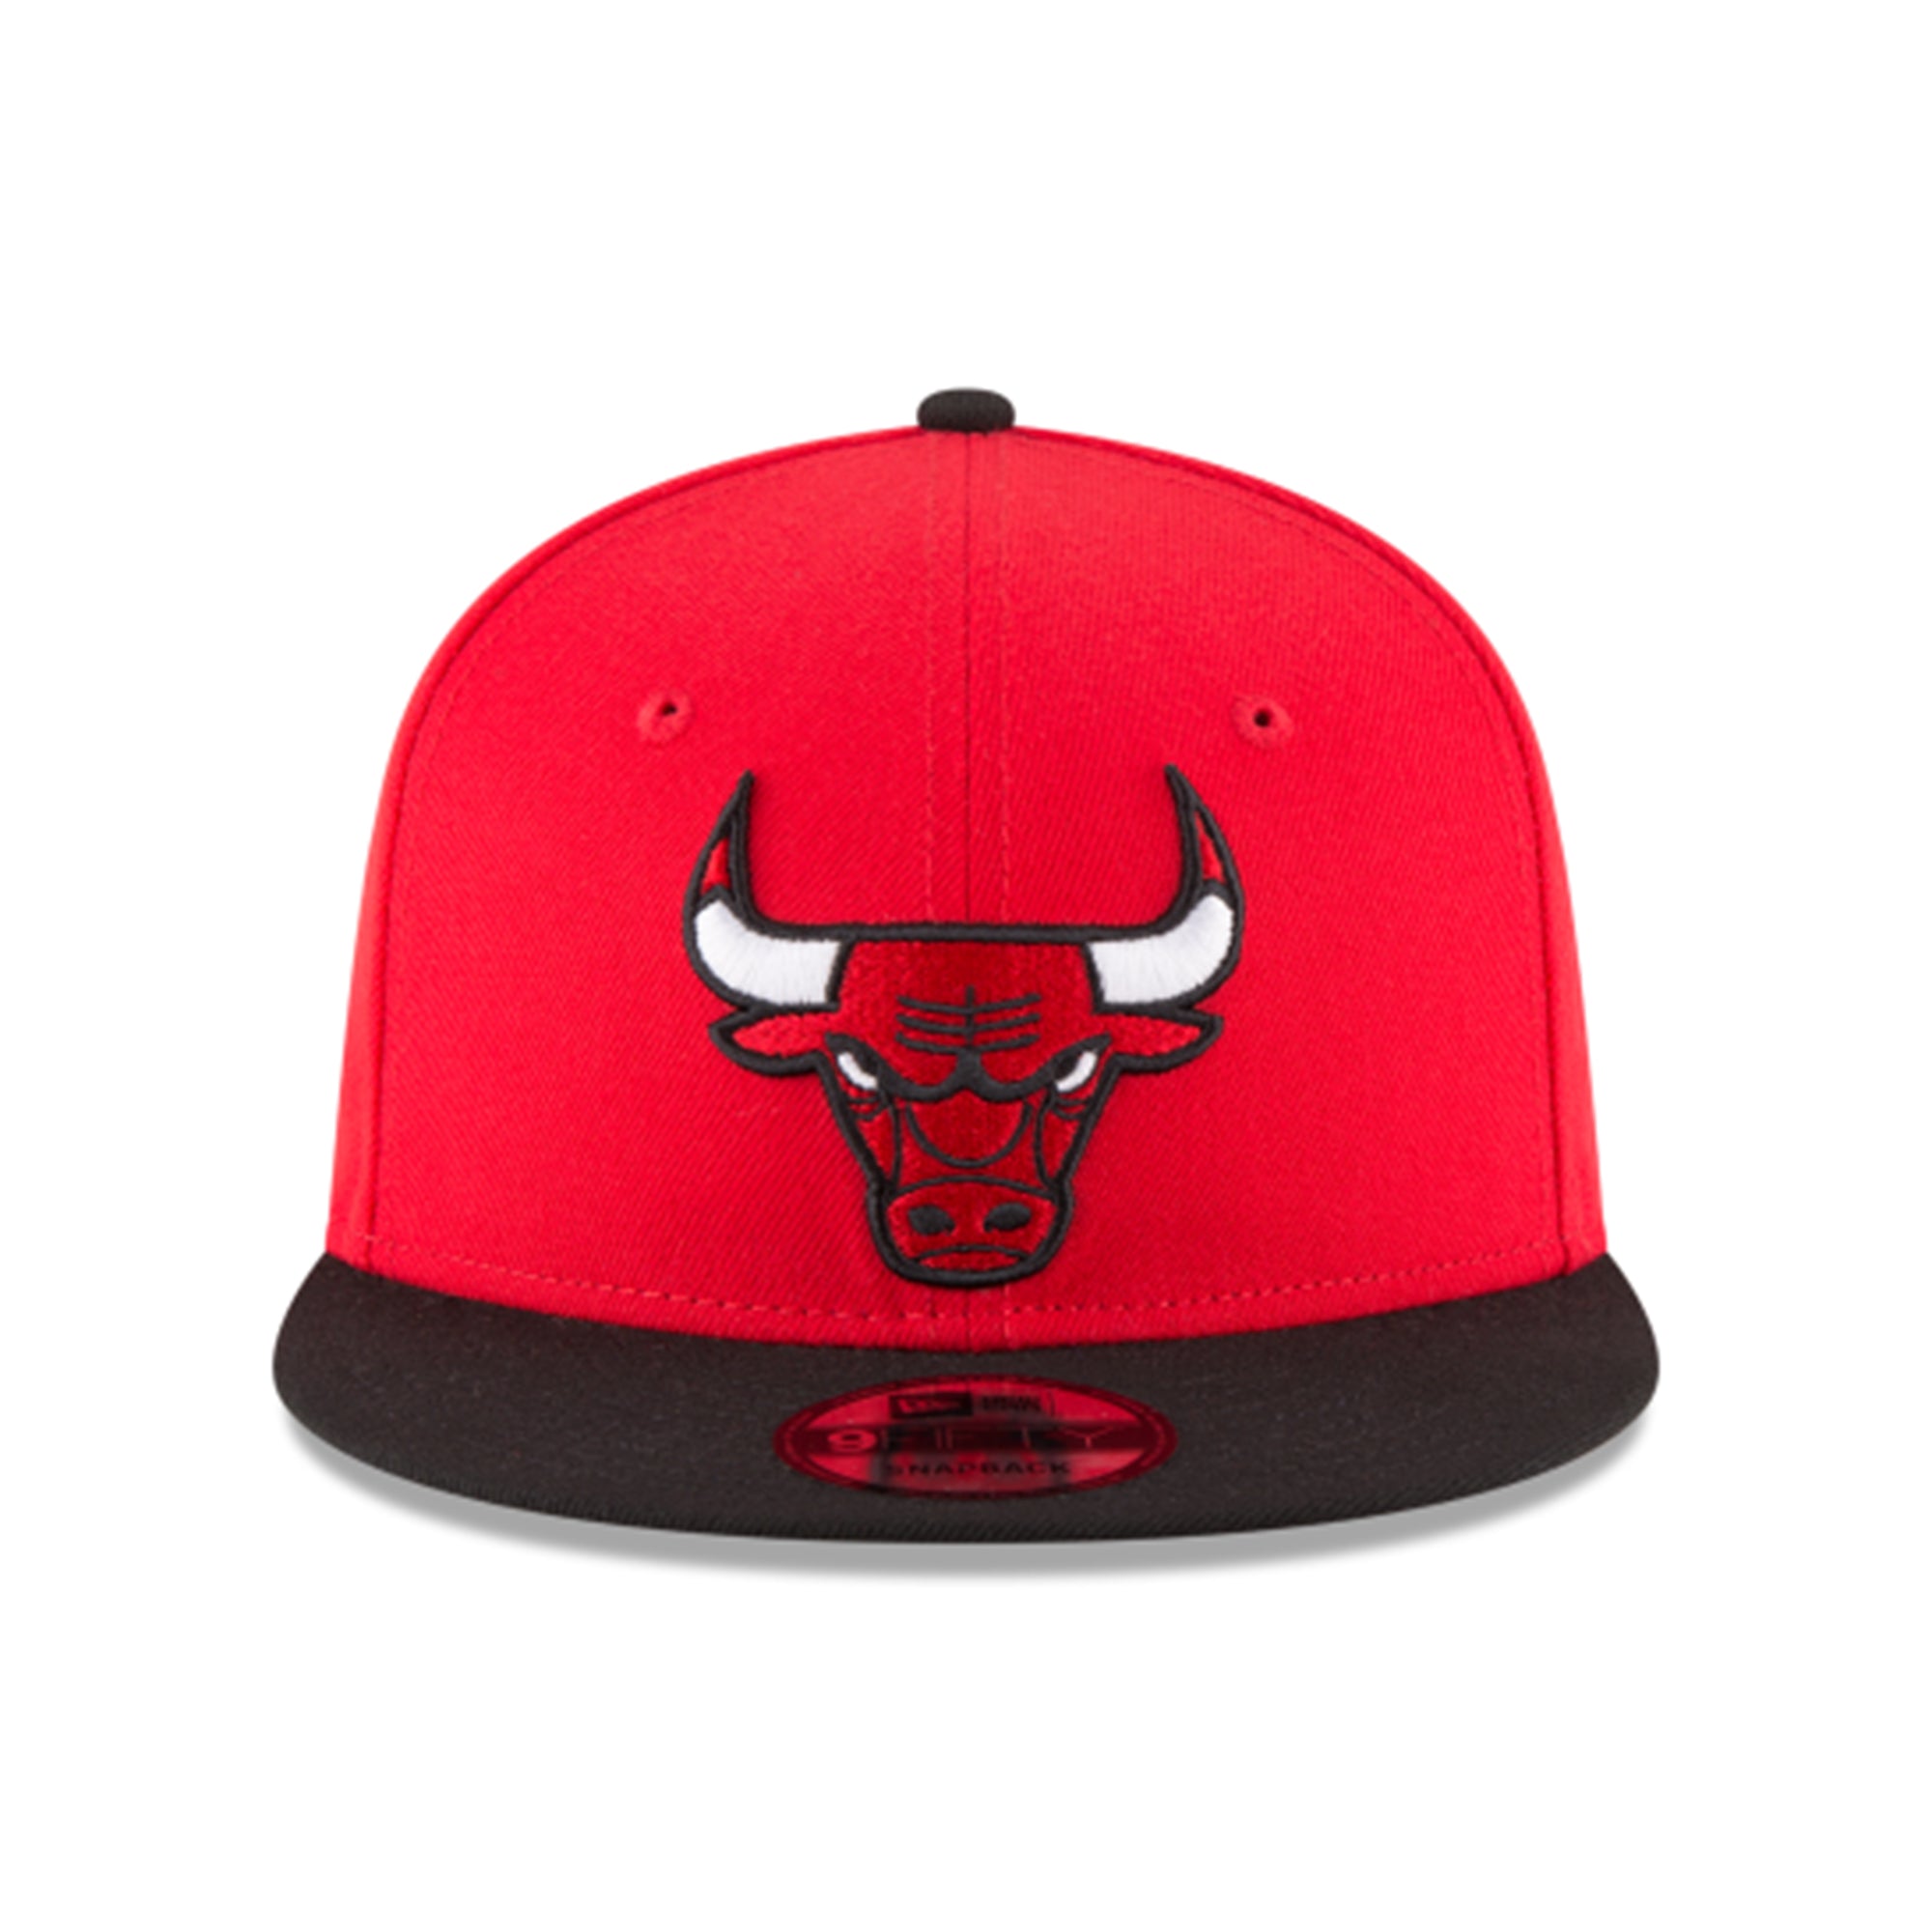 New Era Chicago Bulls Snapback Hat (Red Black)4